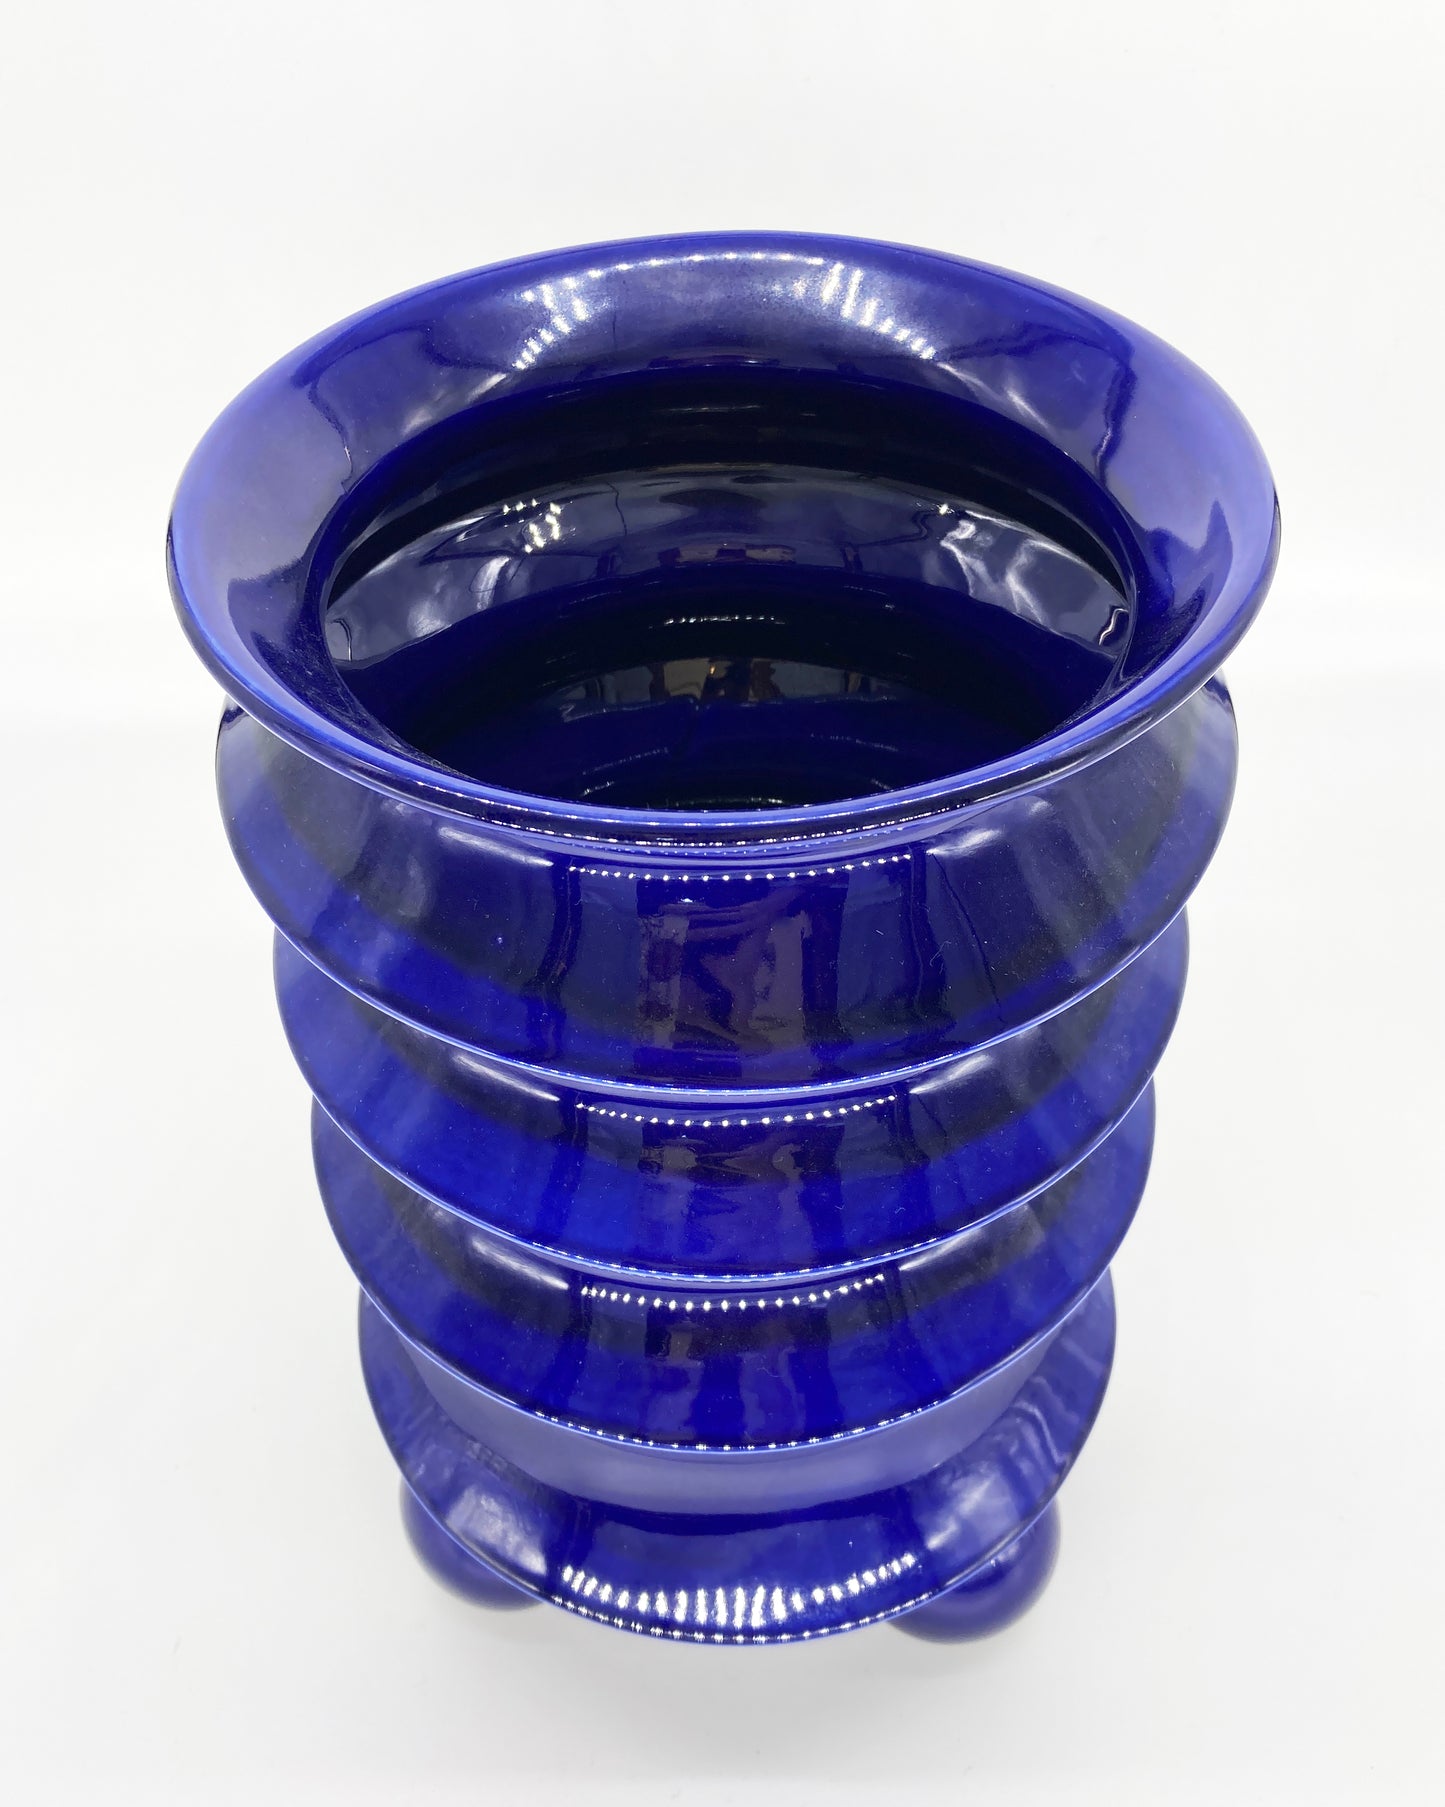 SALE First Edition Toltec Pop Art Ceramic Vase Blue